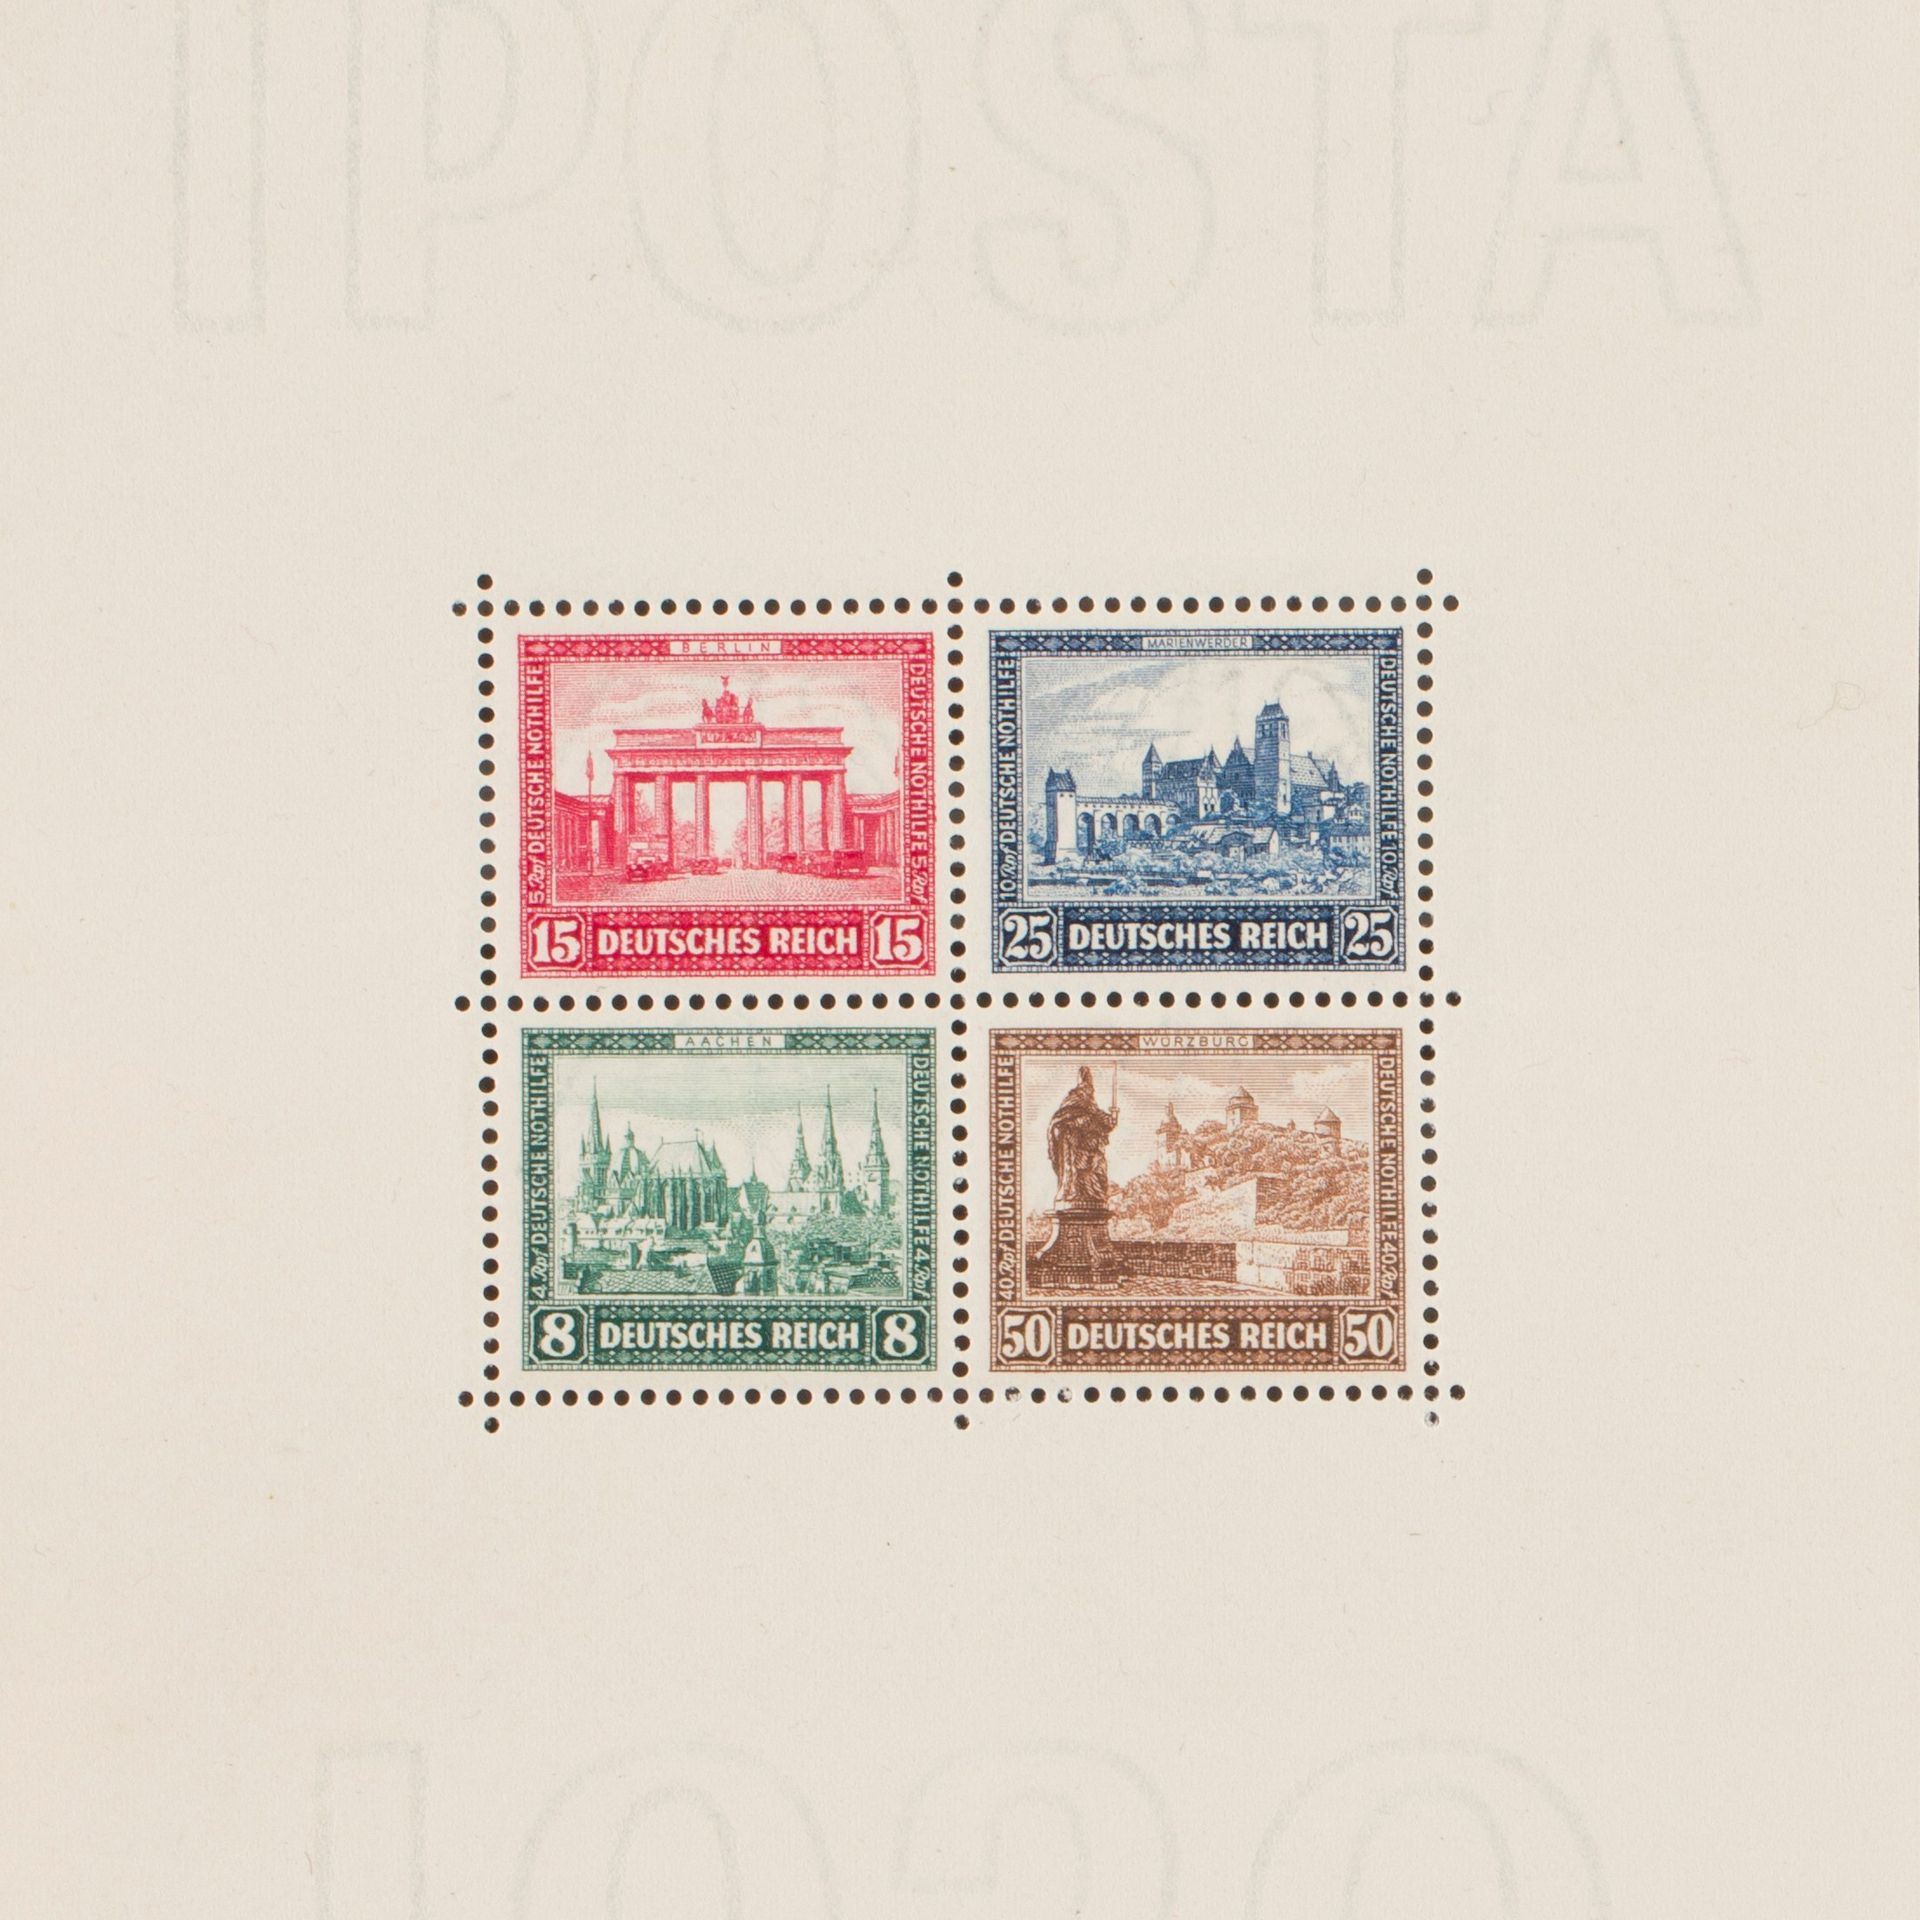 Null [GERMANIA]
Superbo foglio di souvenir Germania n. 1 "IPOSTA 1930" zecca ** &hellip;